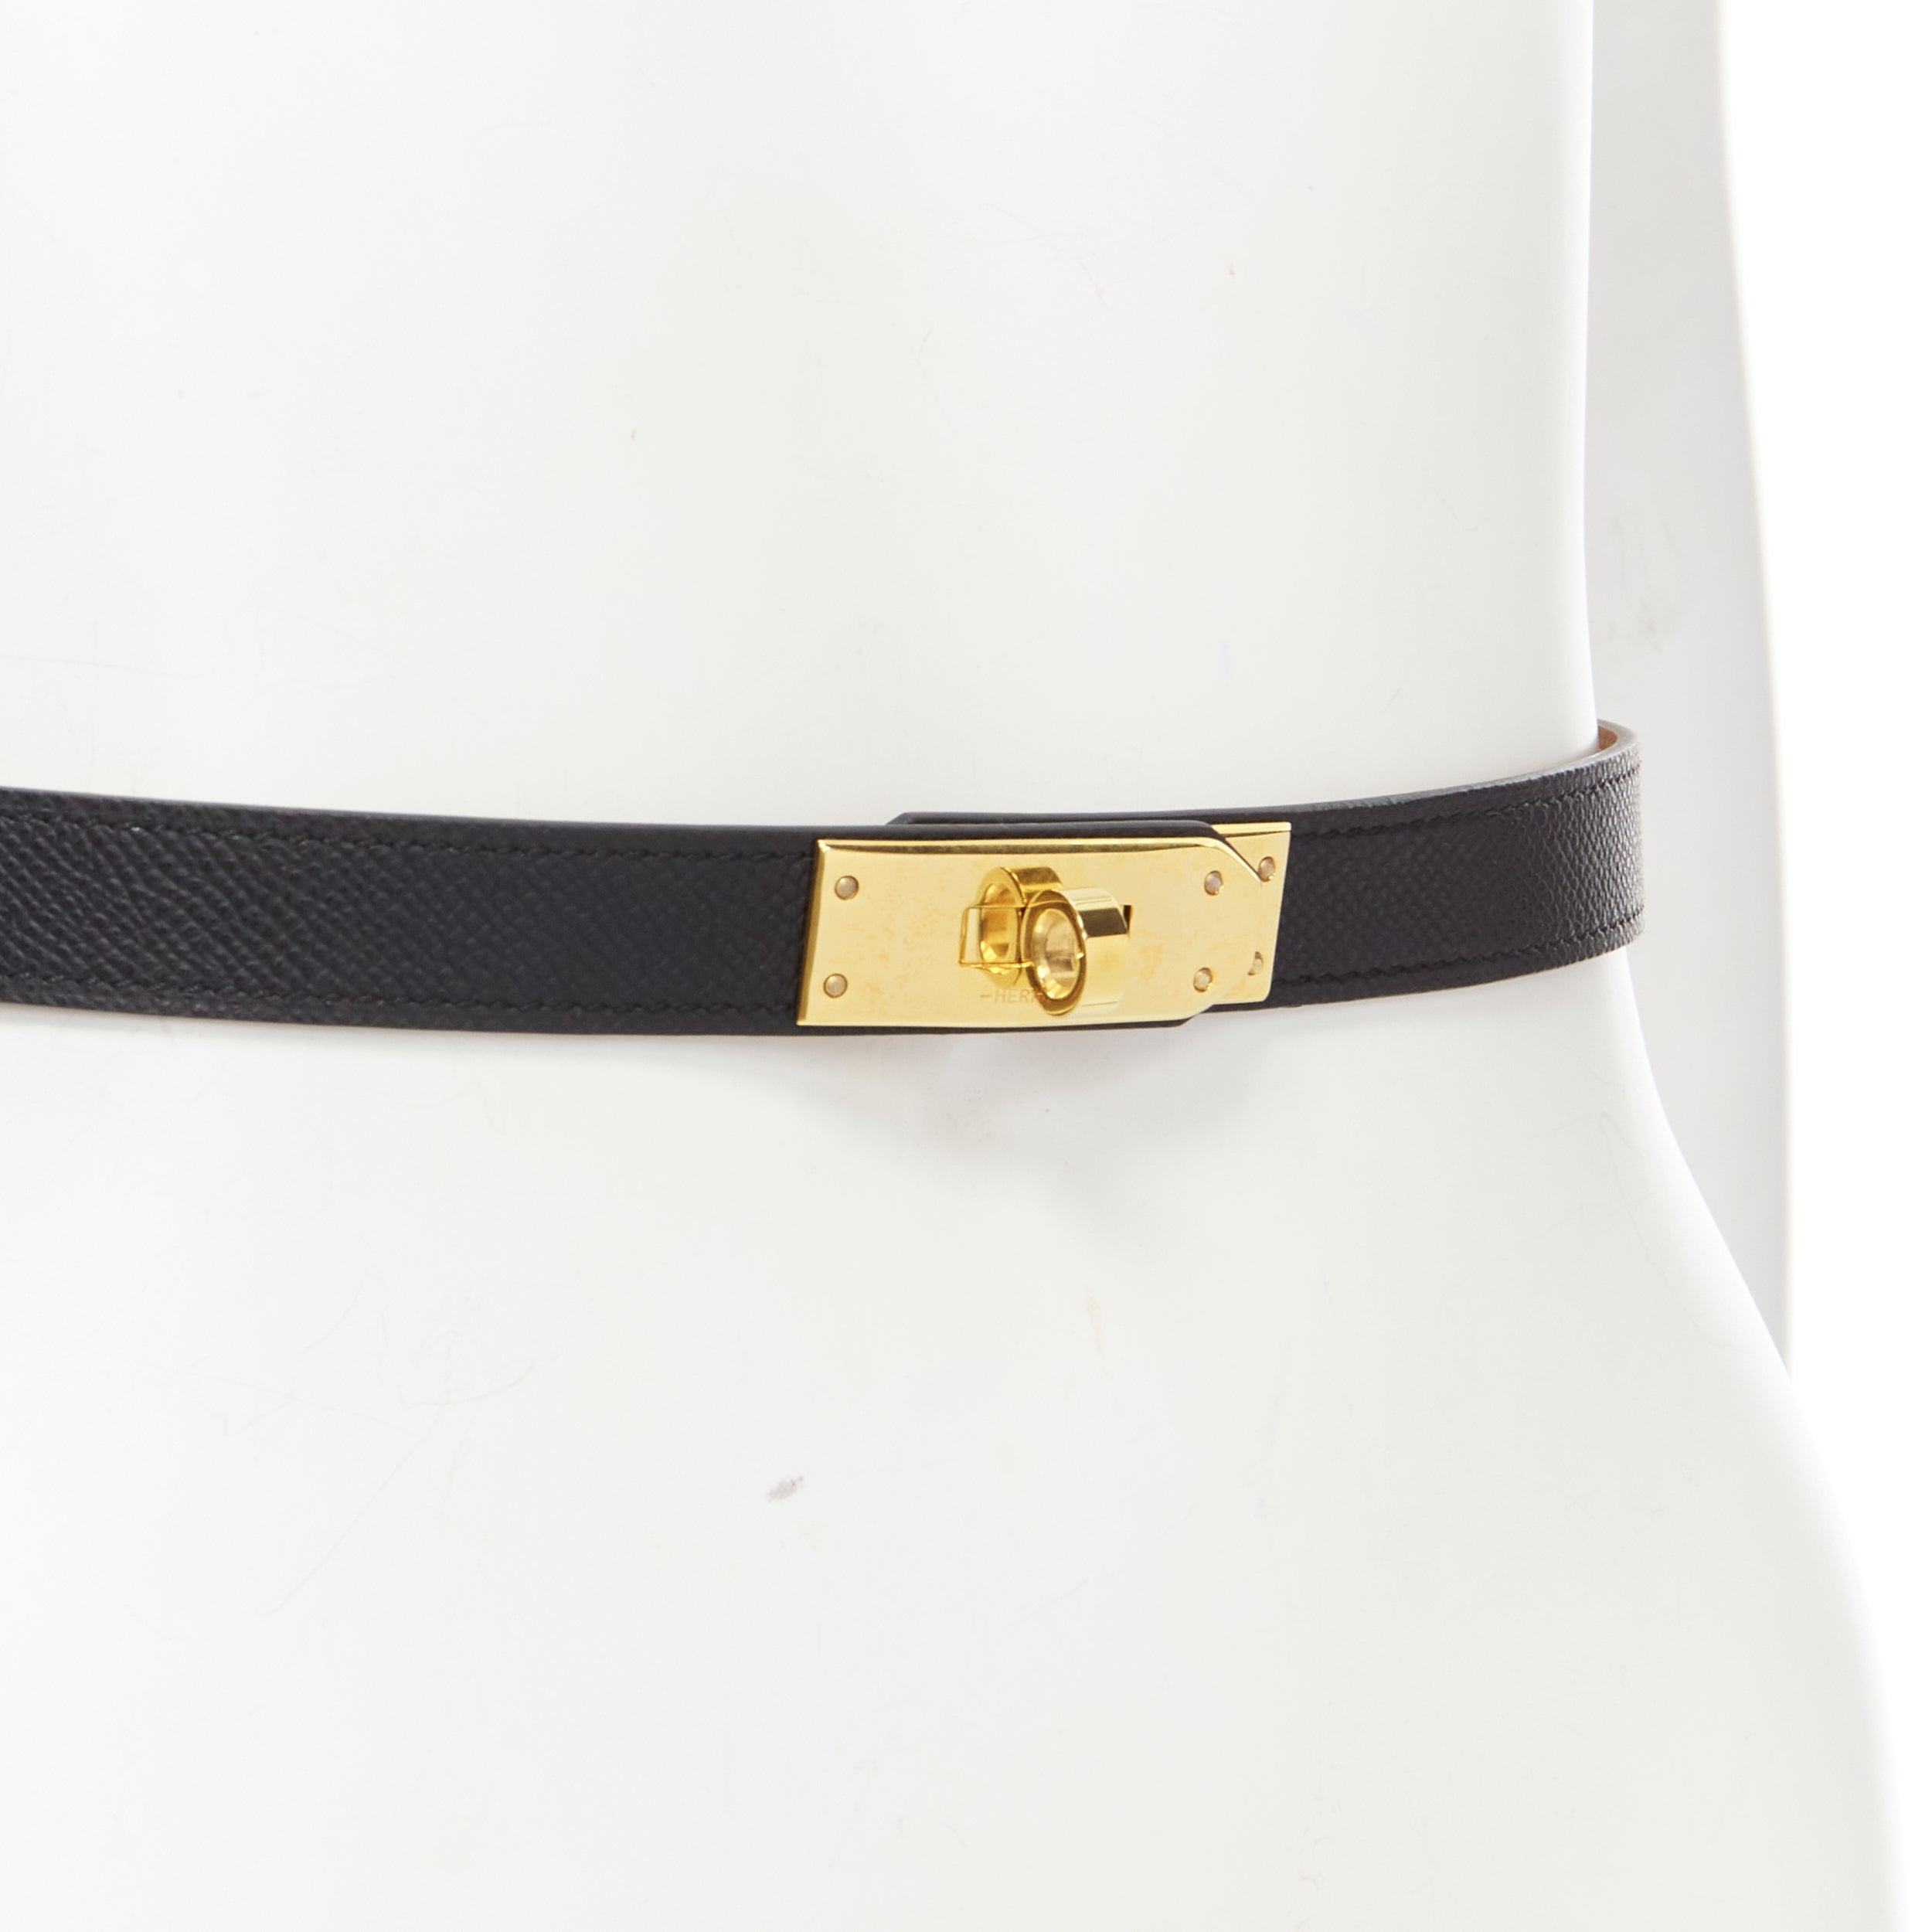 HERMES Kelly black leather gold tone GHW turnlock skinny waist belt adjustable